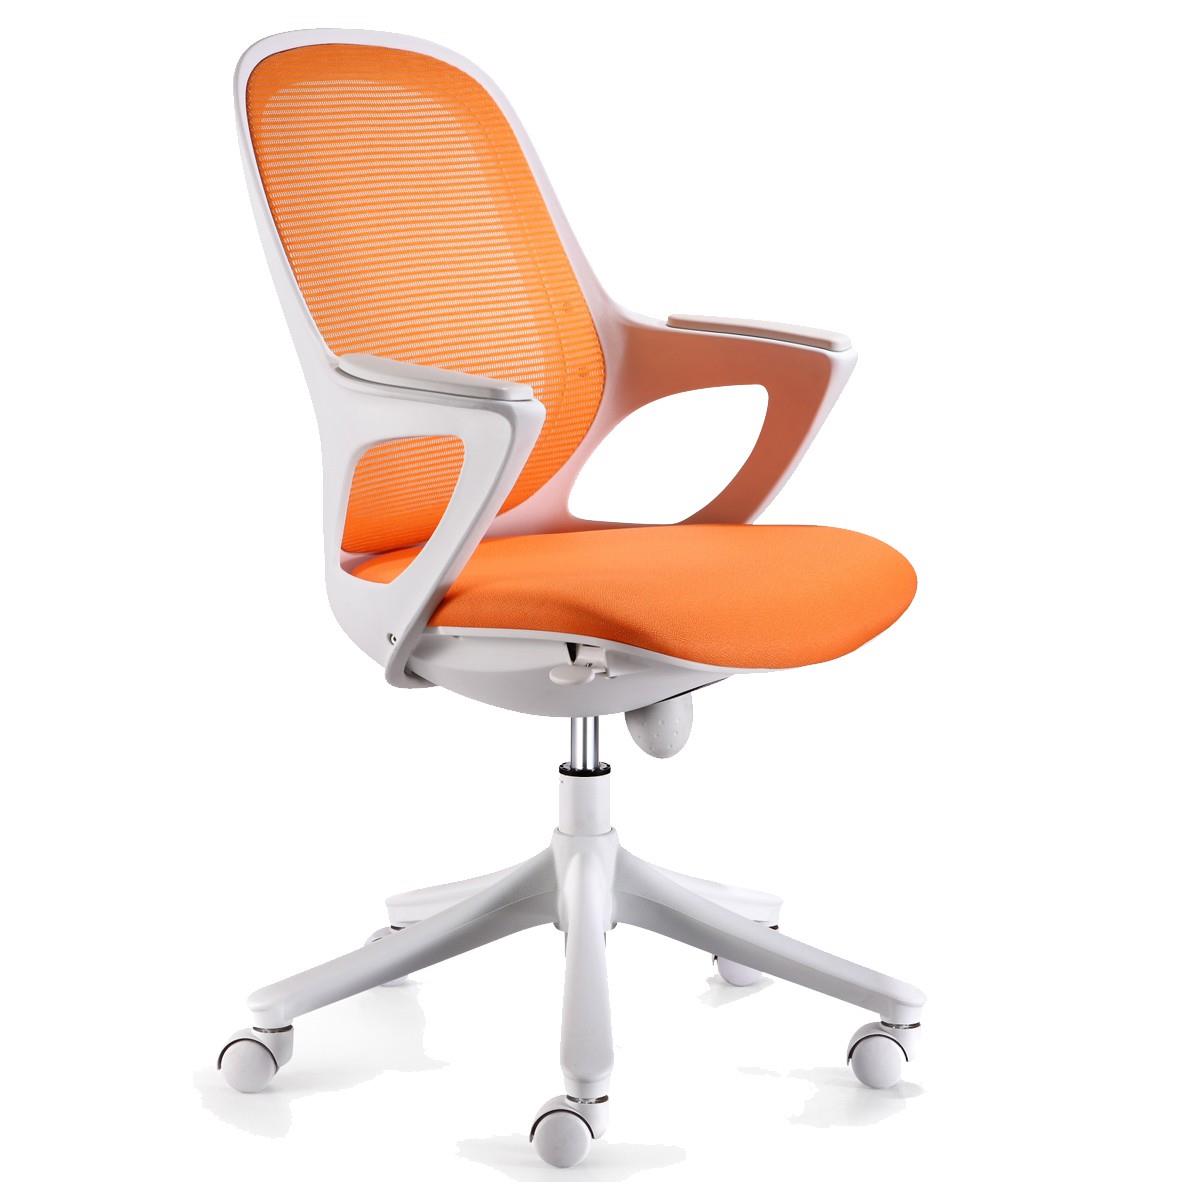 Siège ergonomique VIRGO, Design Exclusif en Tissu et Maille Respirable, Orange